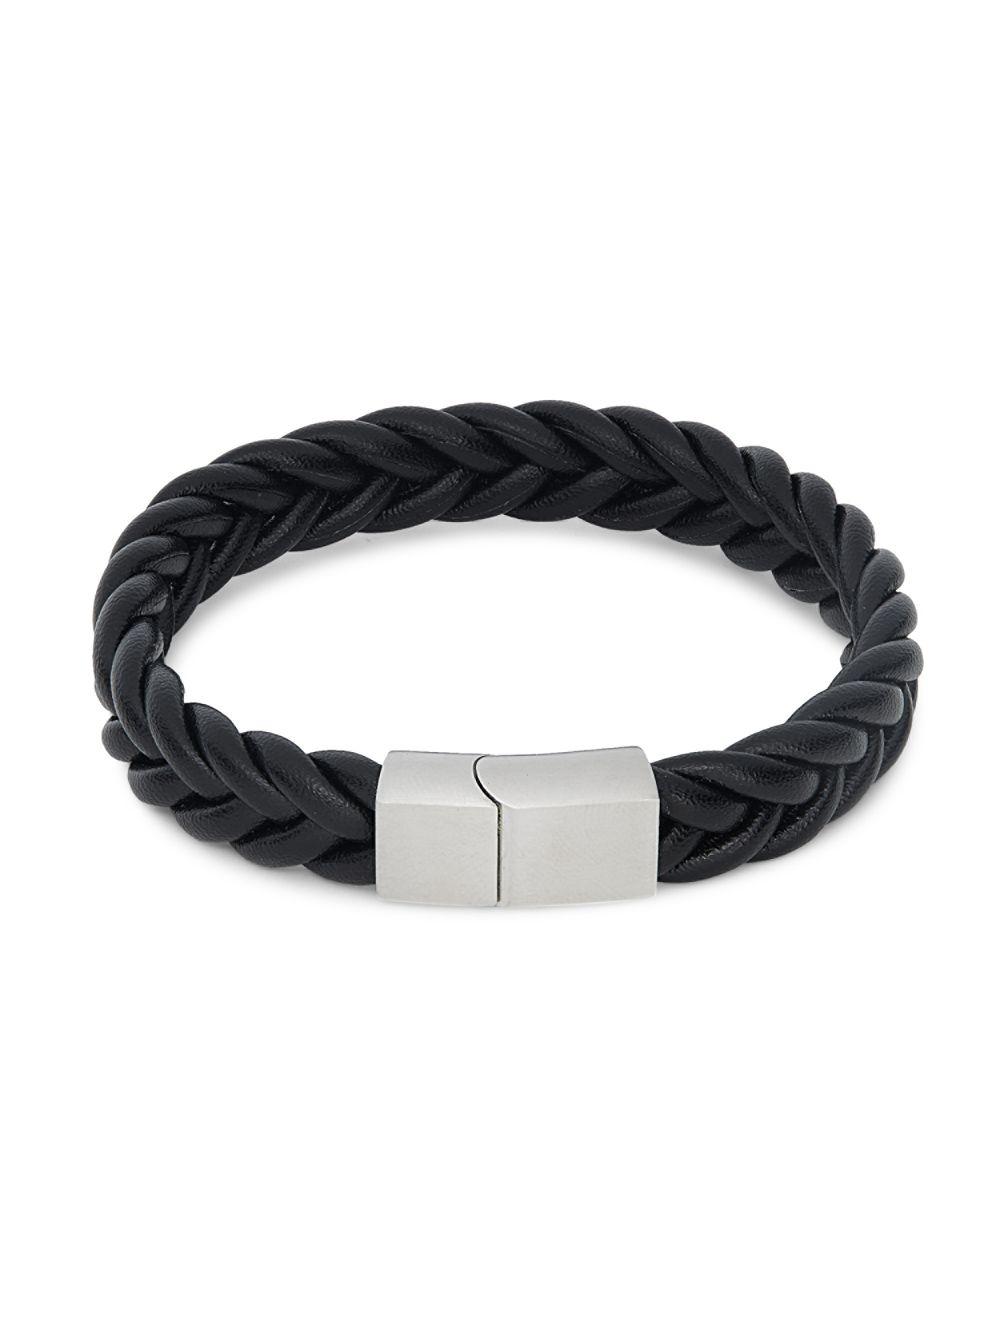 Saks Fifth Avenue Stainless Steel & Leather Braided Bracelet in Black for Men - Lyst